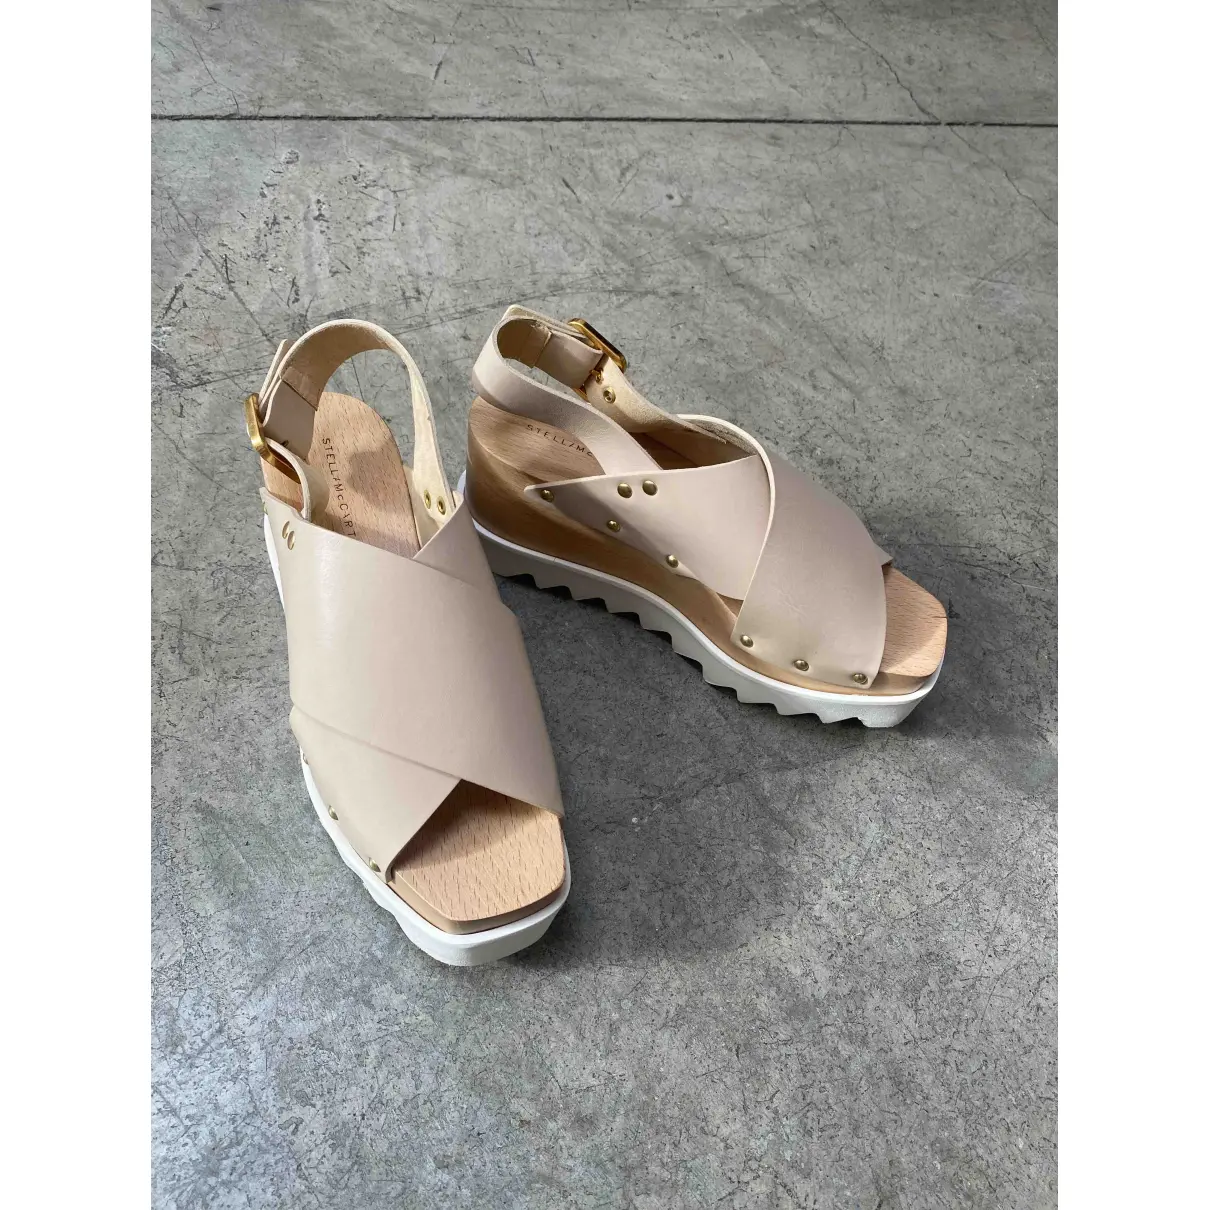 Buy Stella McCartney Elyse sandals online